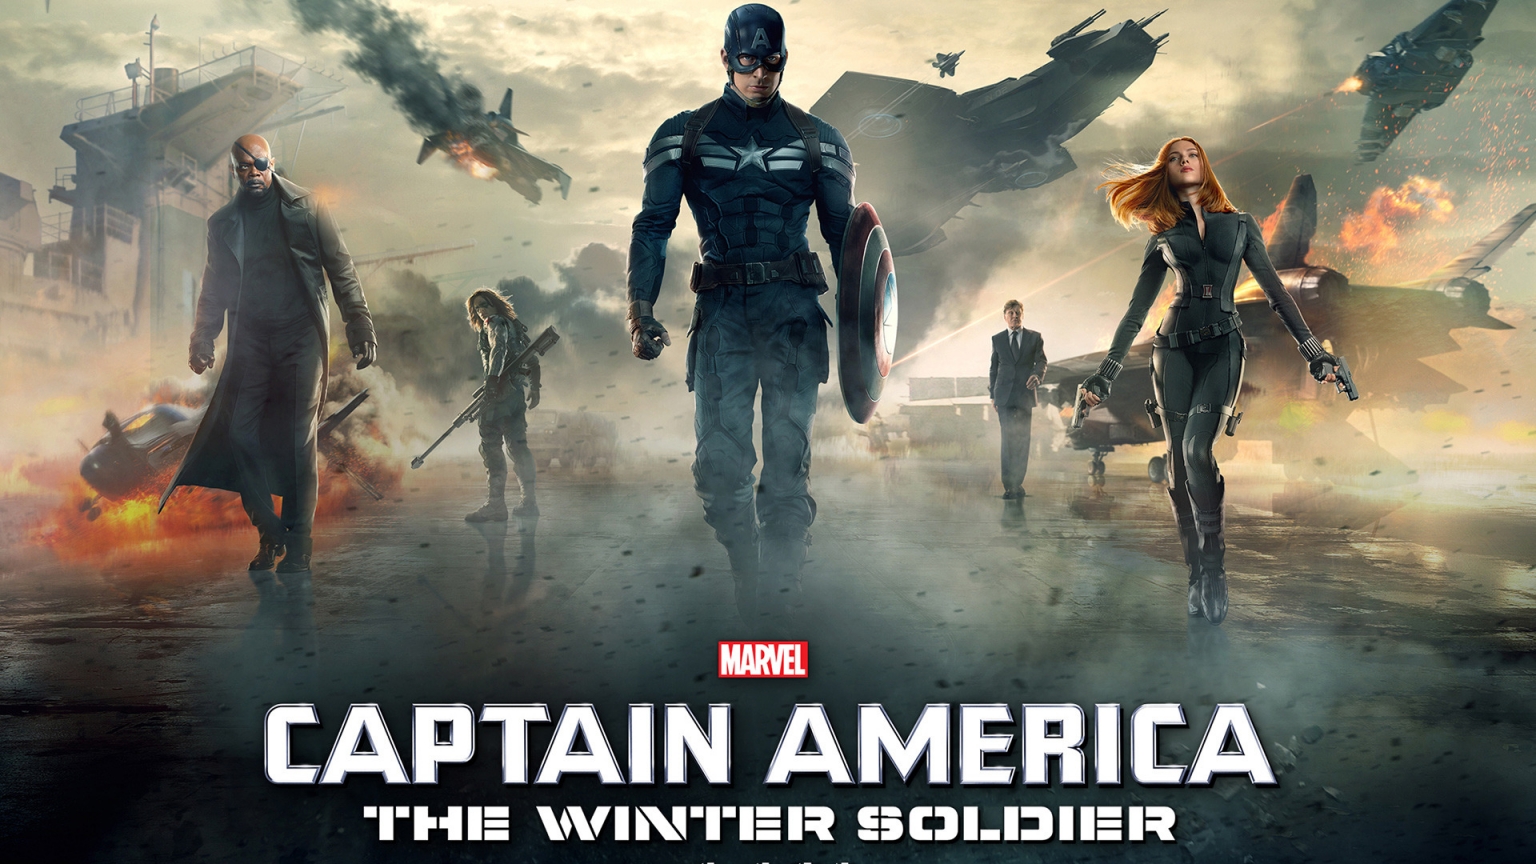 Captain America 2 Movie for 1536 x 864 HDTV resolution